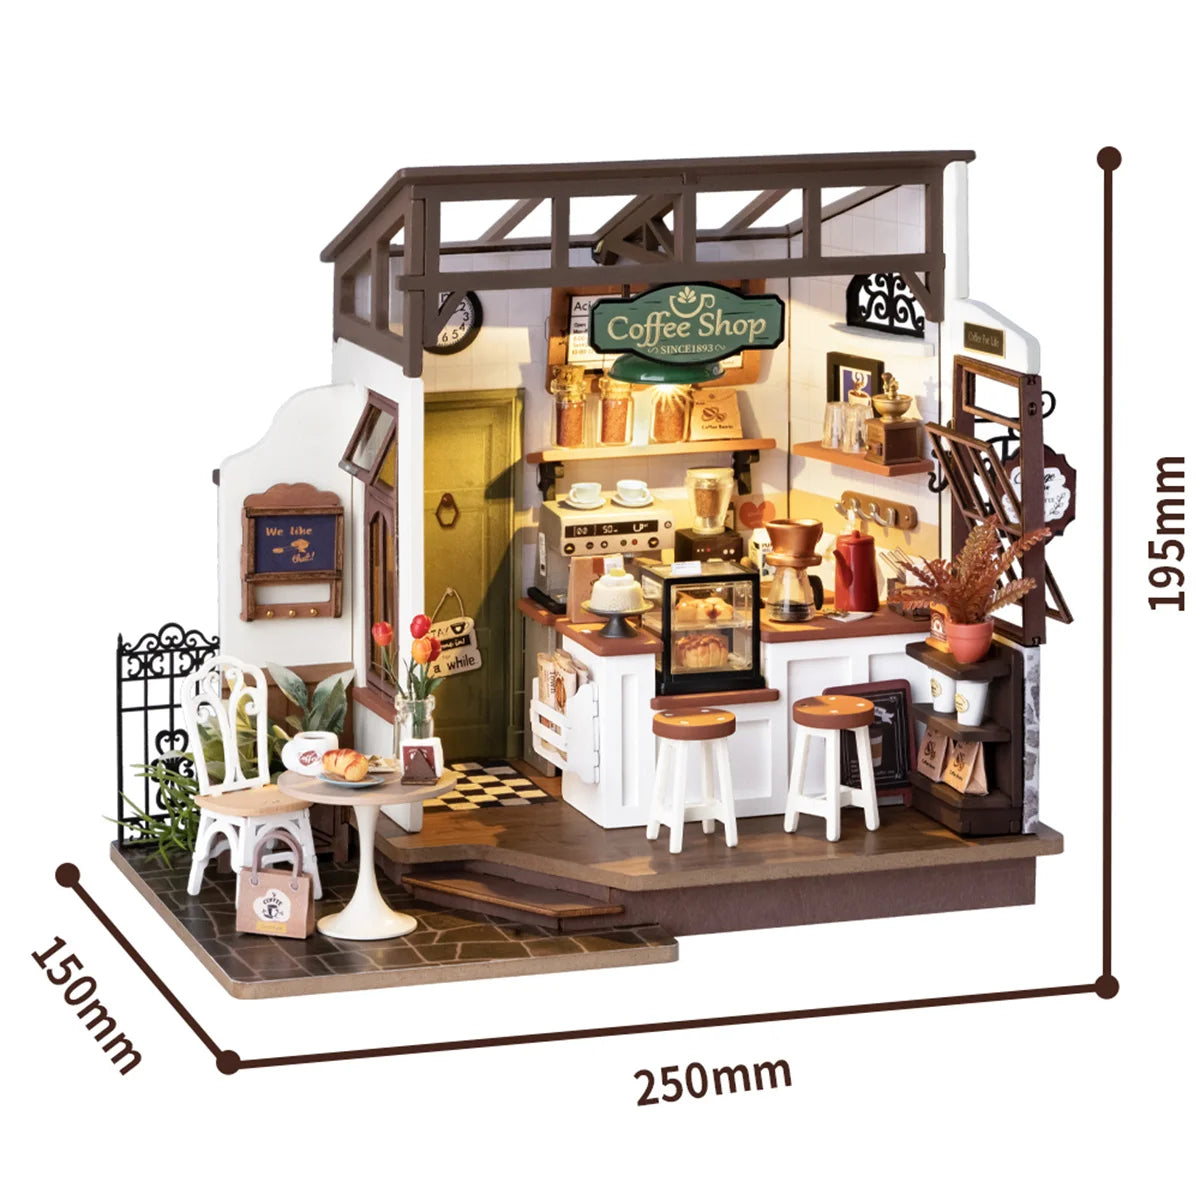 Rolife DIY Mini Dollhouse No 17 Cafe Model Kit